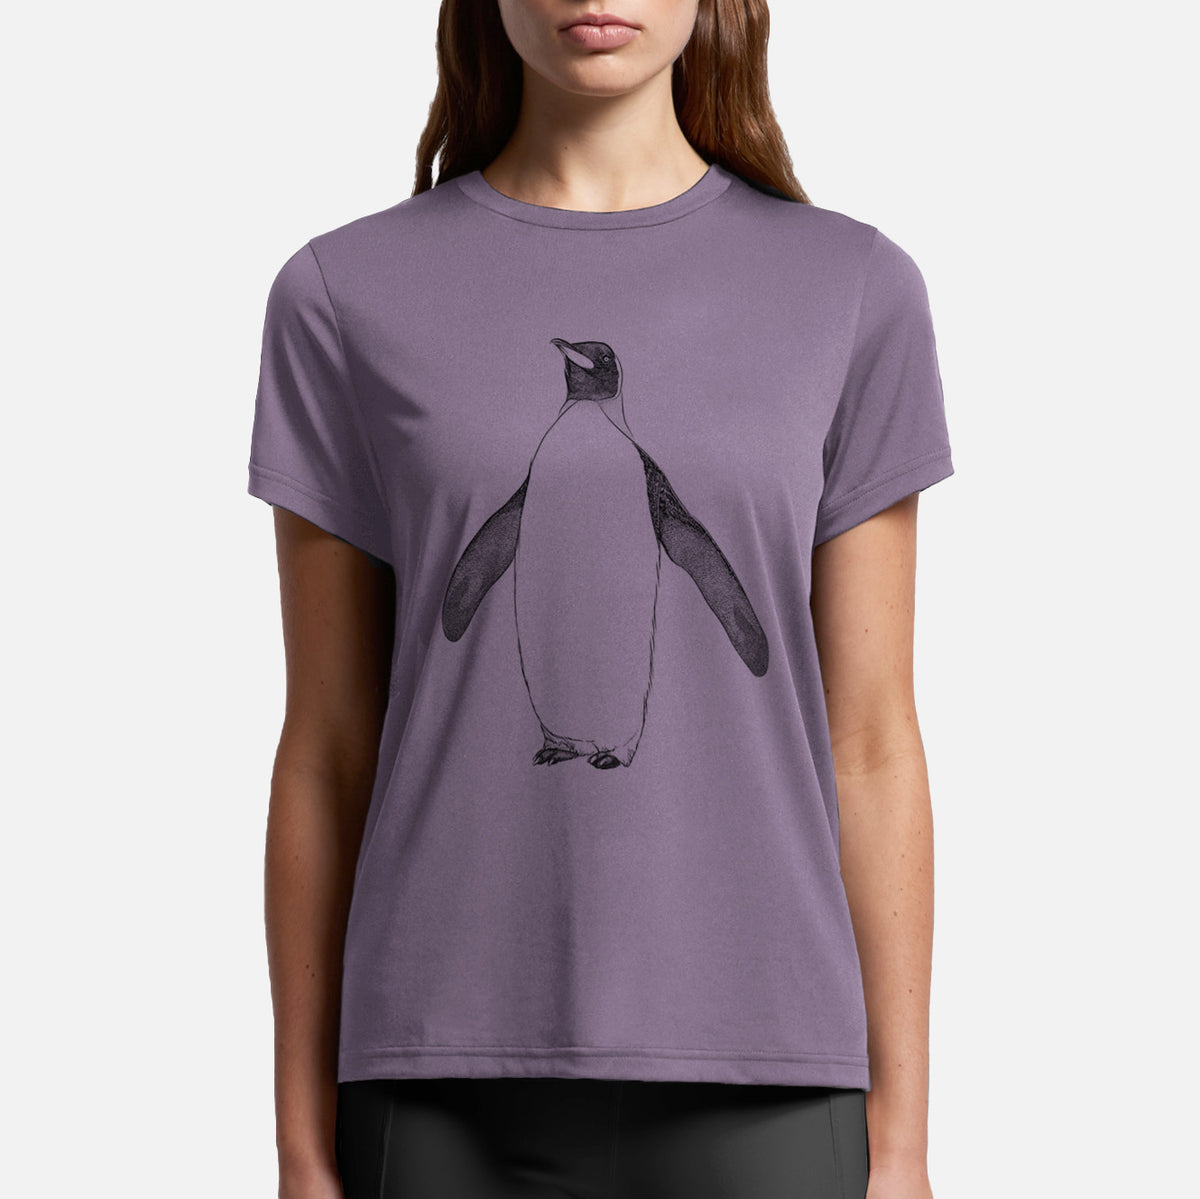 Emperor Penguin - Aptenodytes forsteri - Womens Everyday Maple Tee